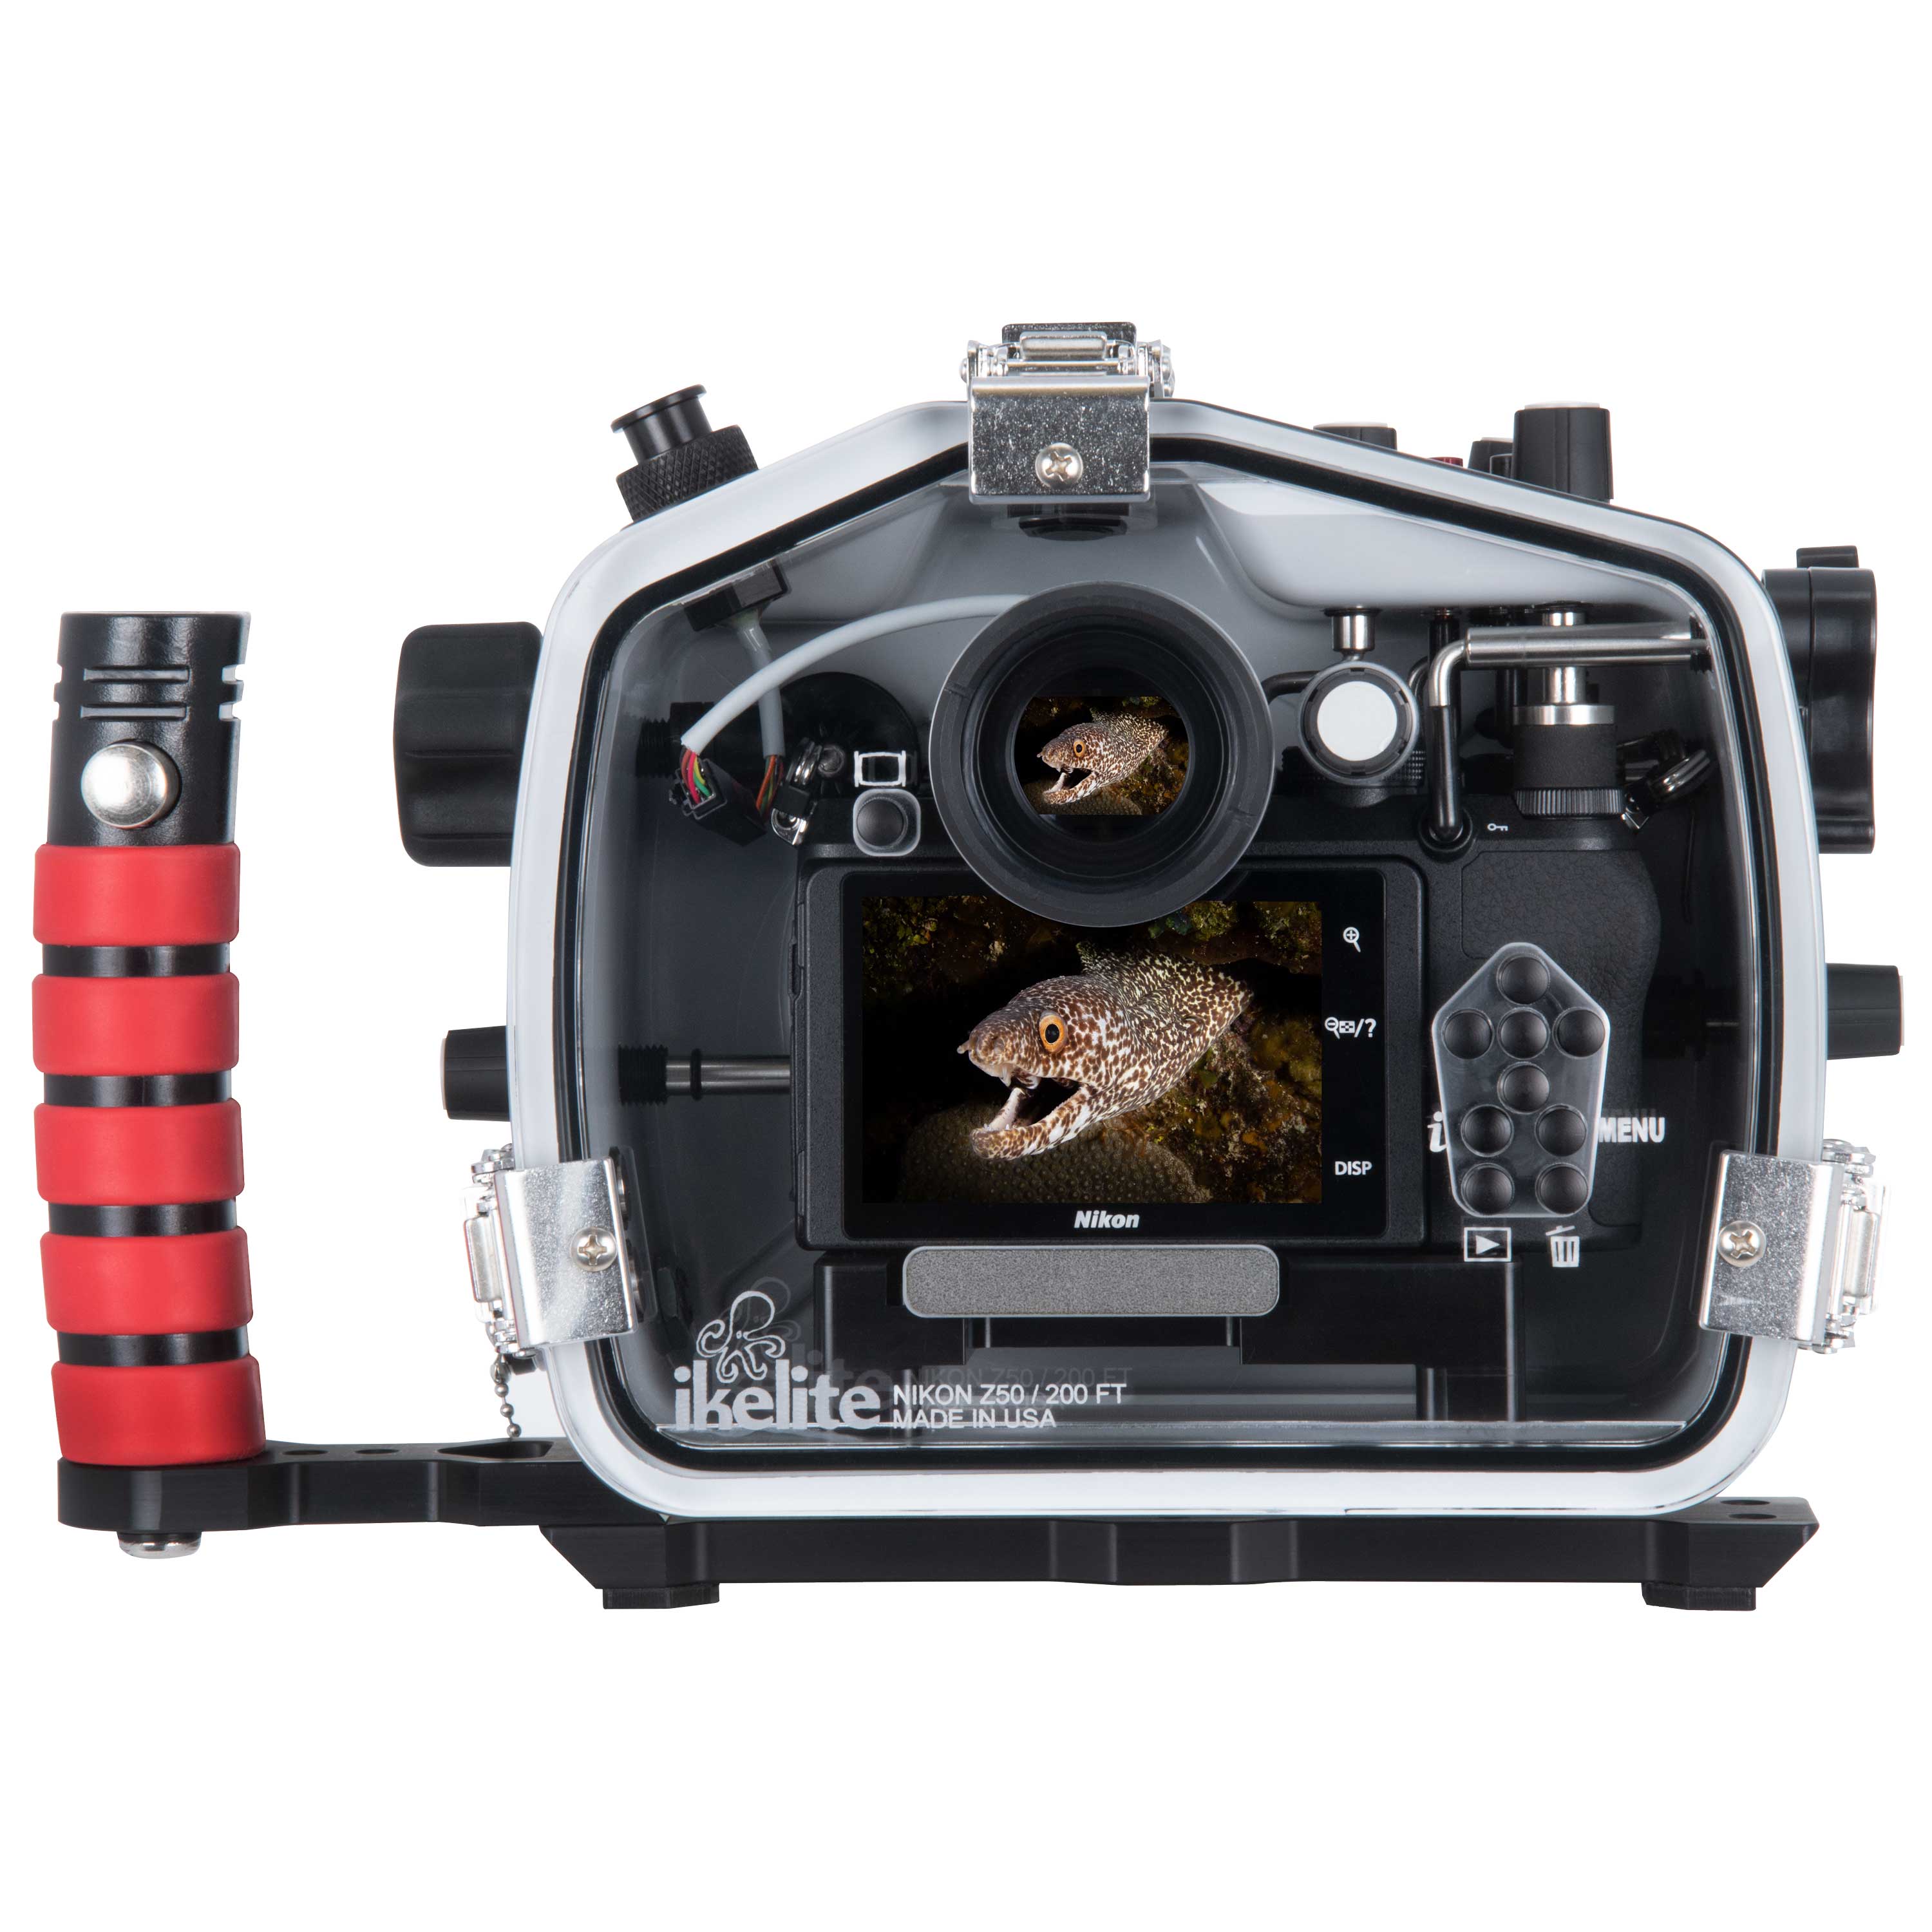 200DL Underwater Housing for Nikon D750 DSLR Cameras